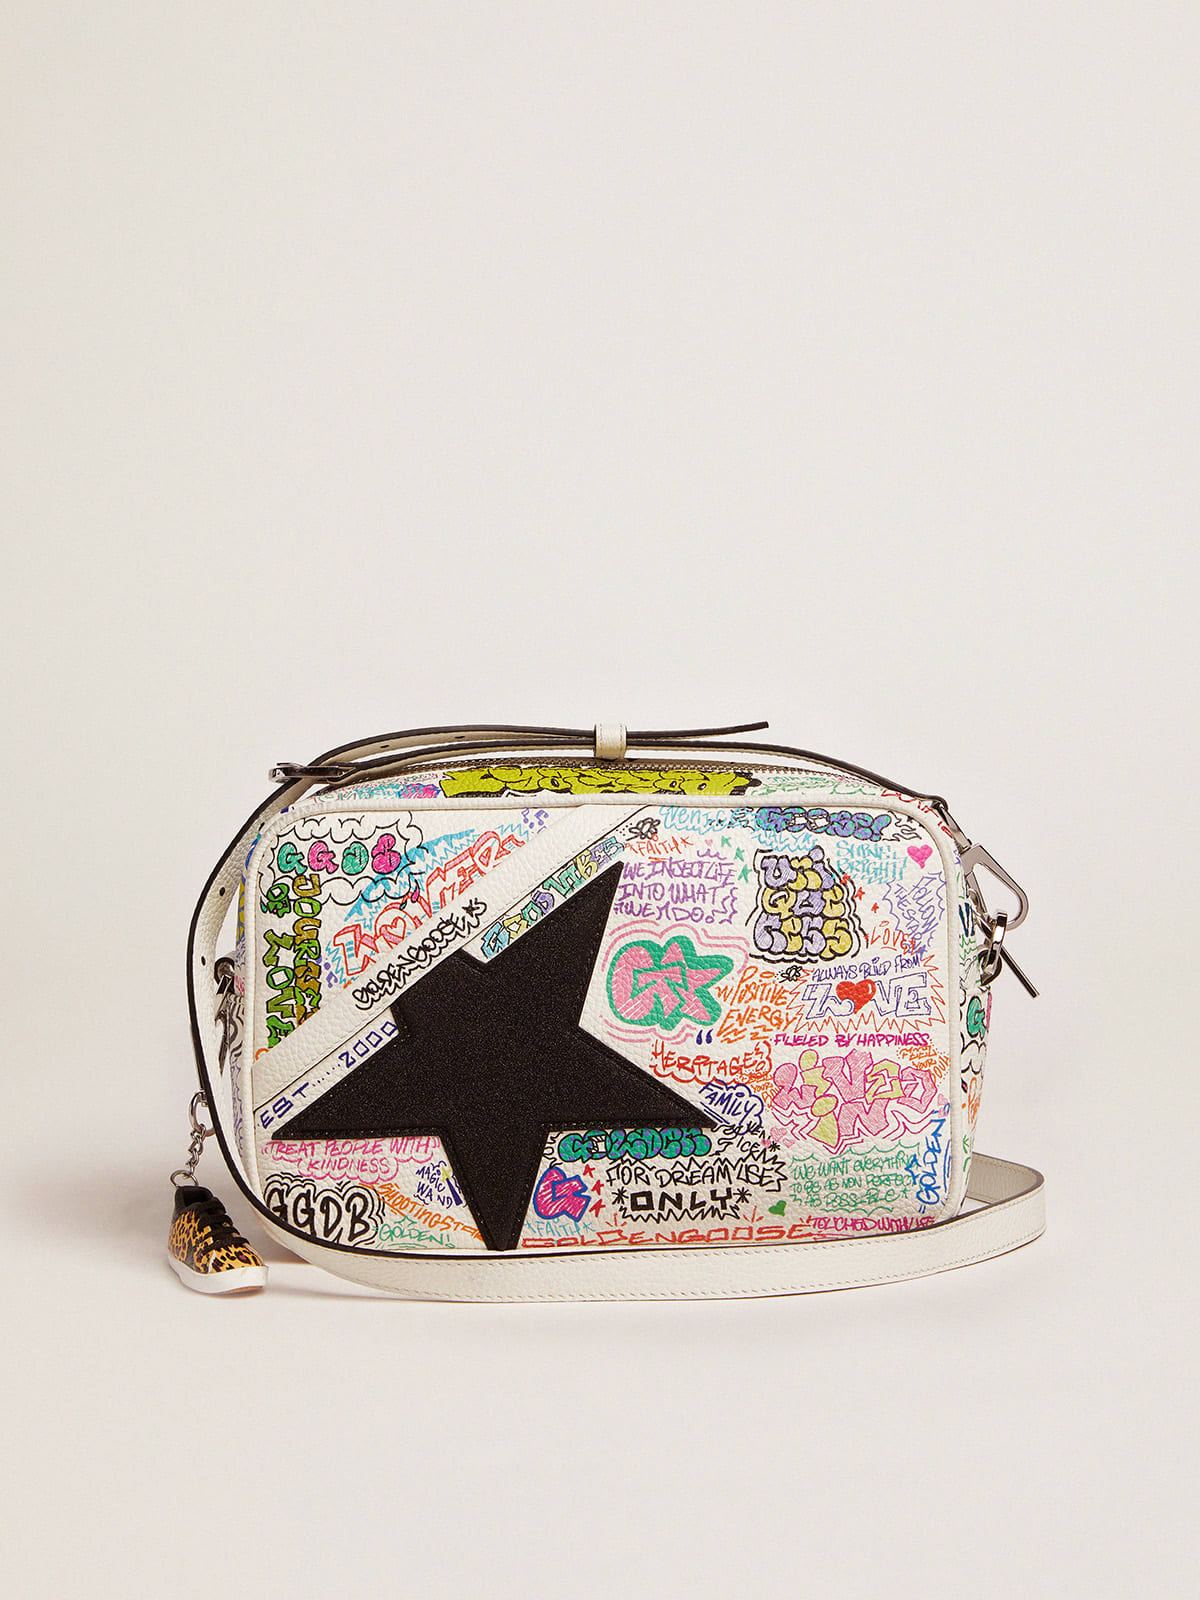 Star Bag with graffiti print and black glitter star